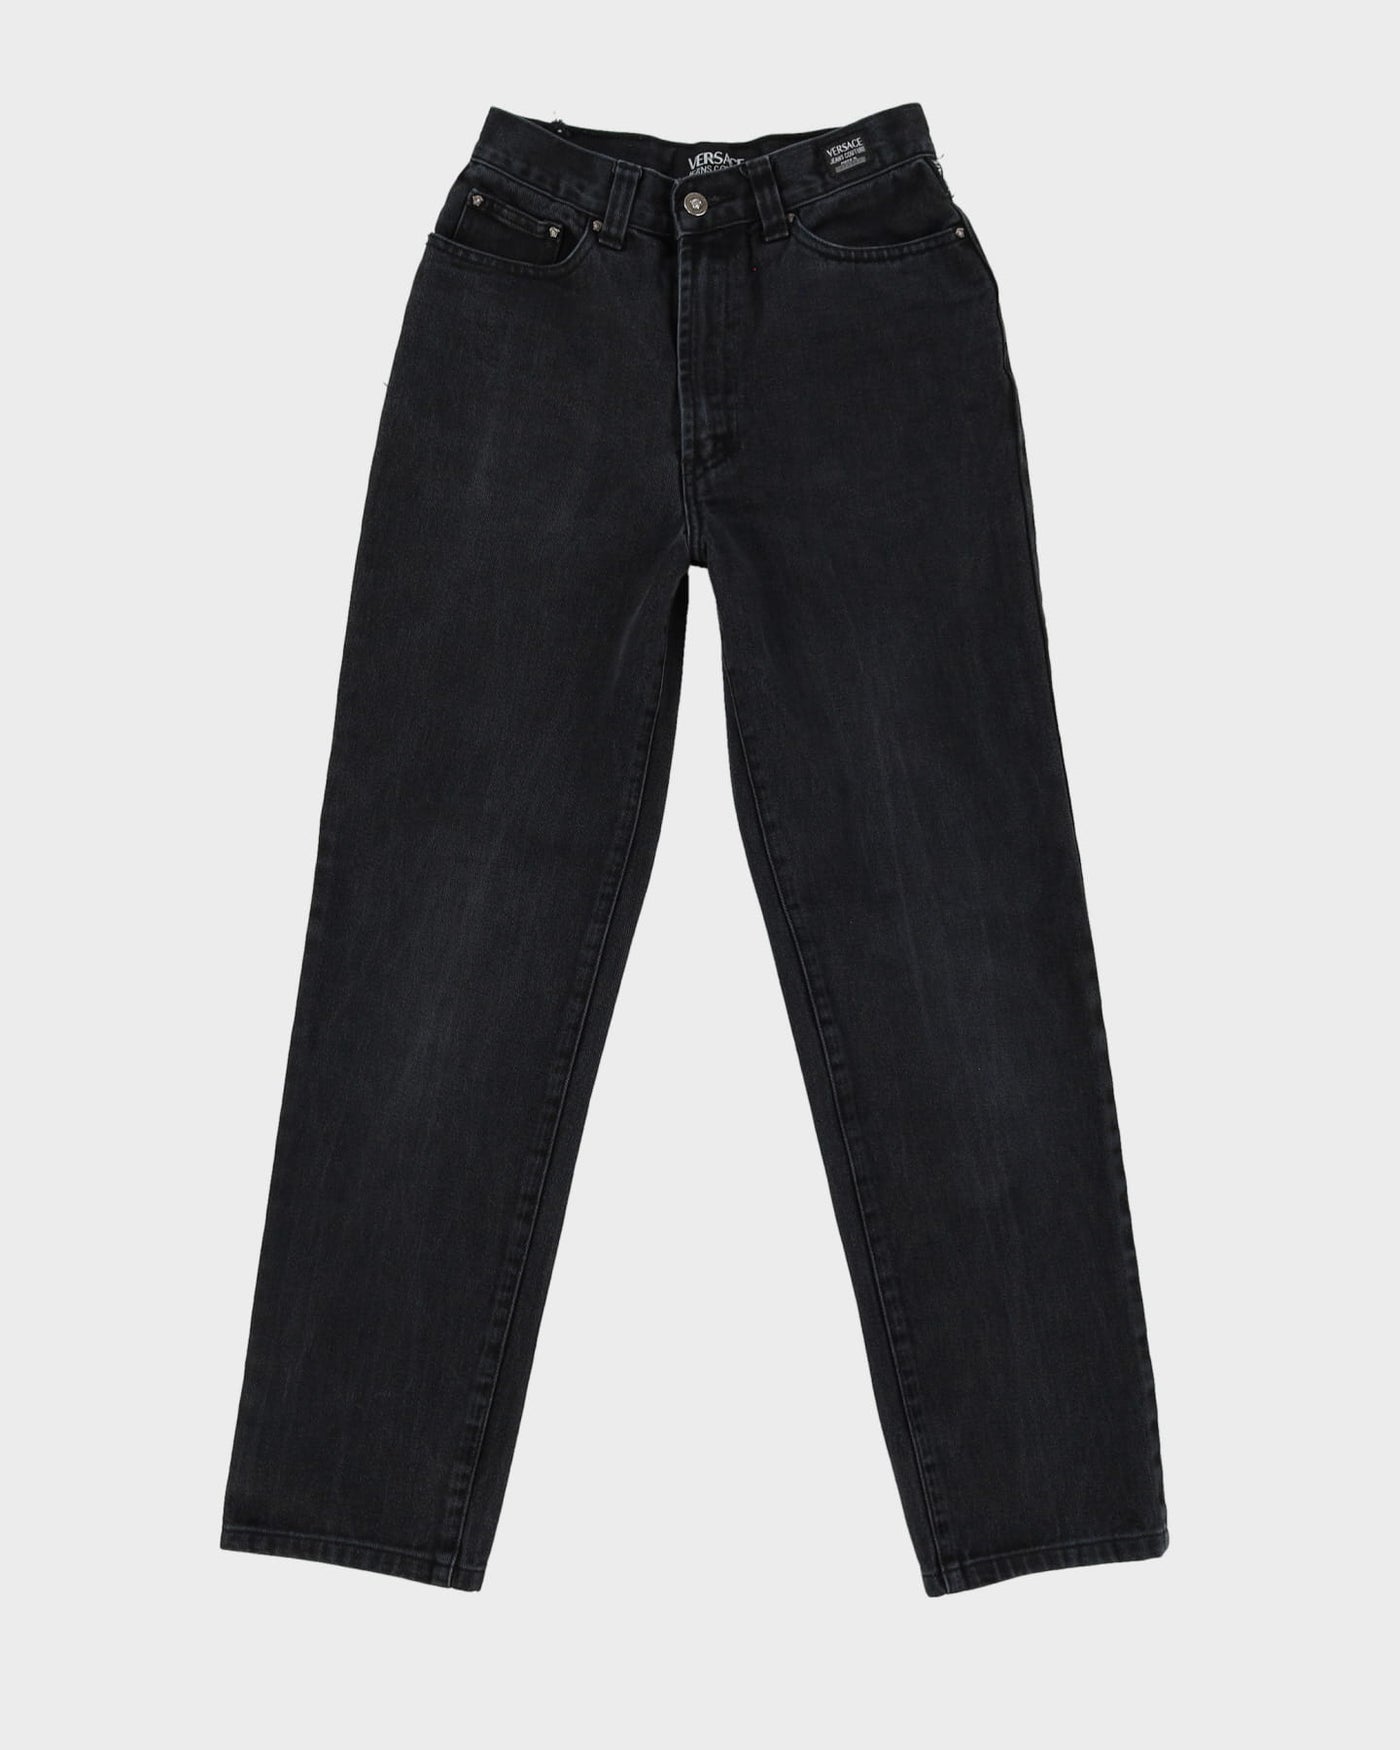 Vintage 90s Versace Black Dark Wash Jeans - W25 L29